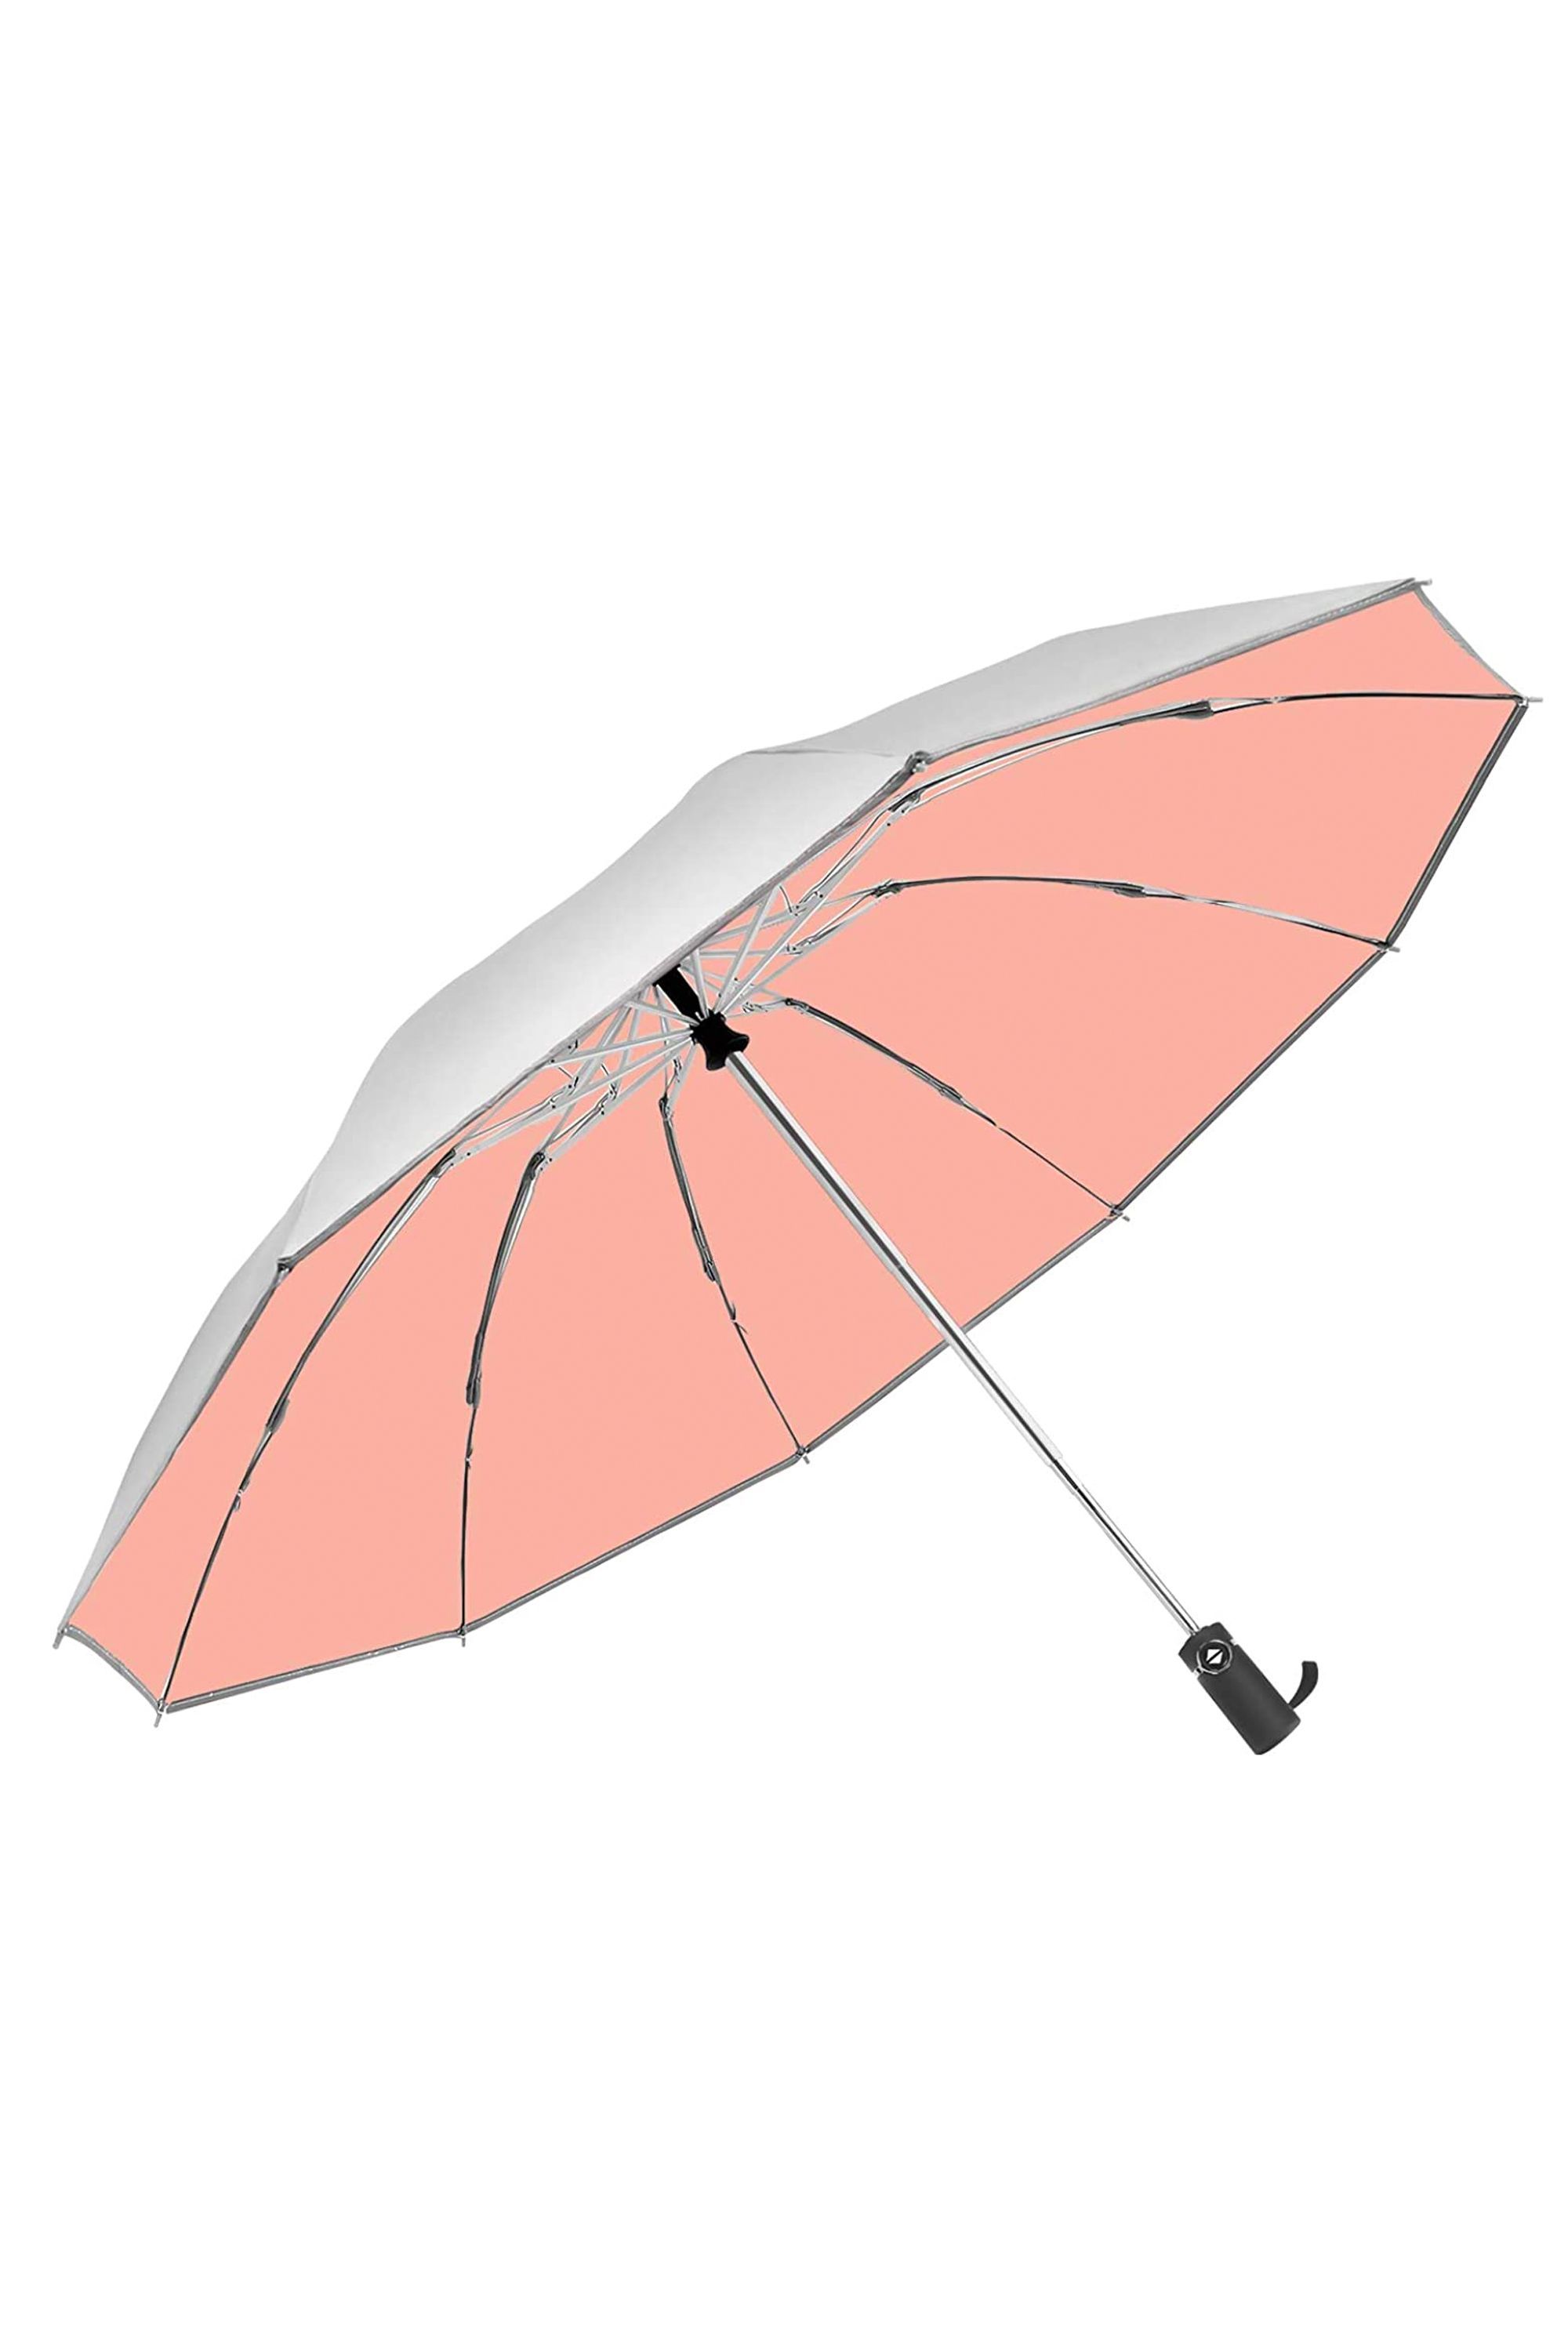 Inverted Compact Automatic Folding Umbrella